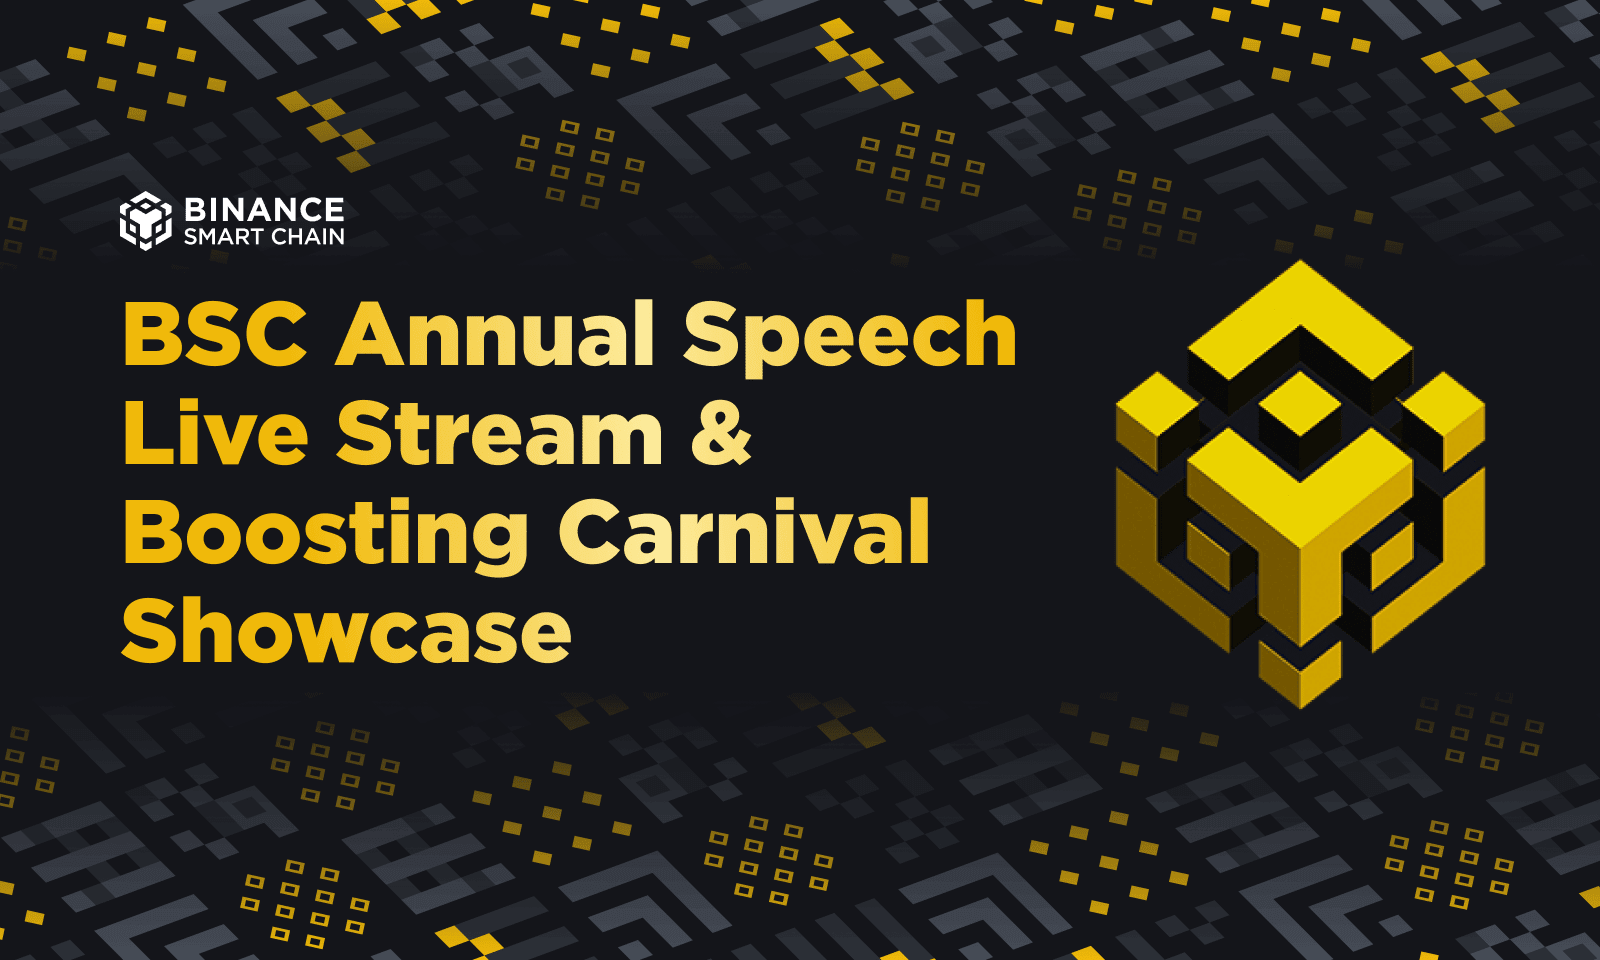 BSC Annual Speech Live Stream & Boosting Carnival Showcase